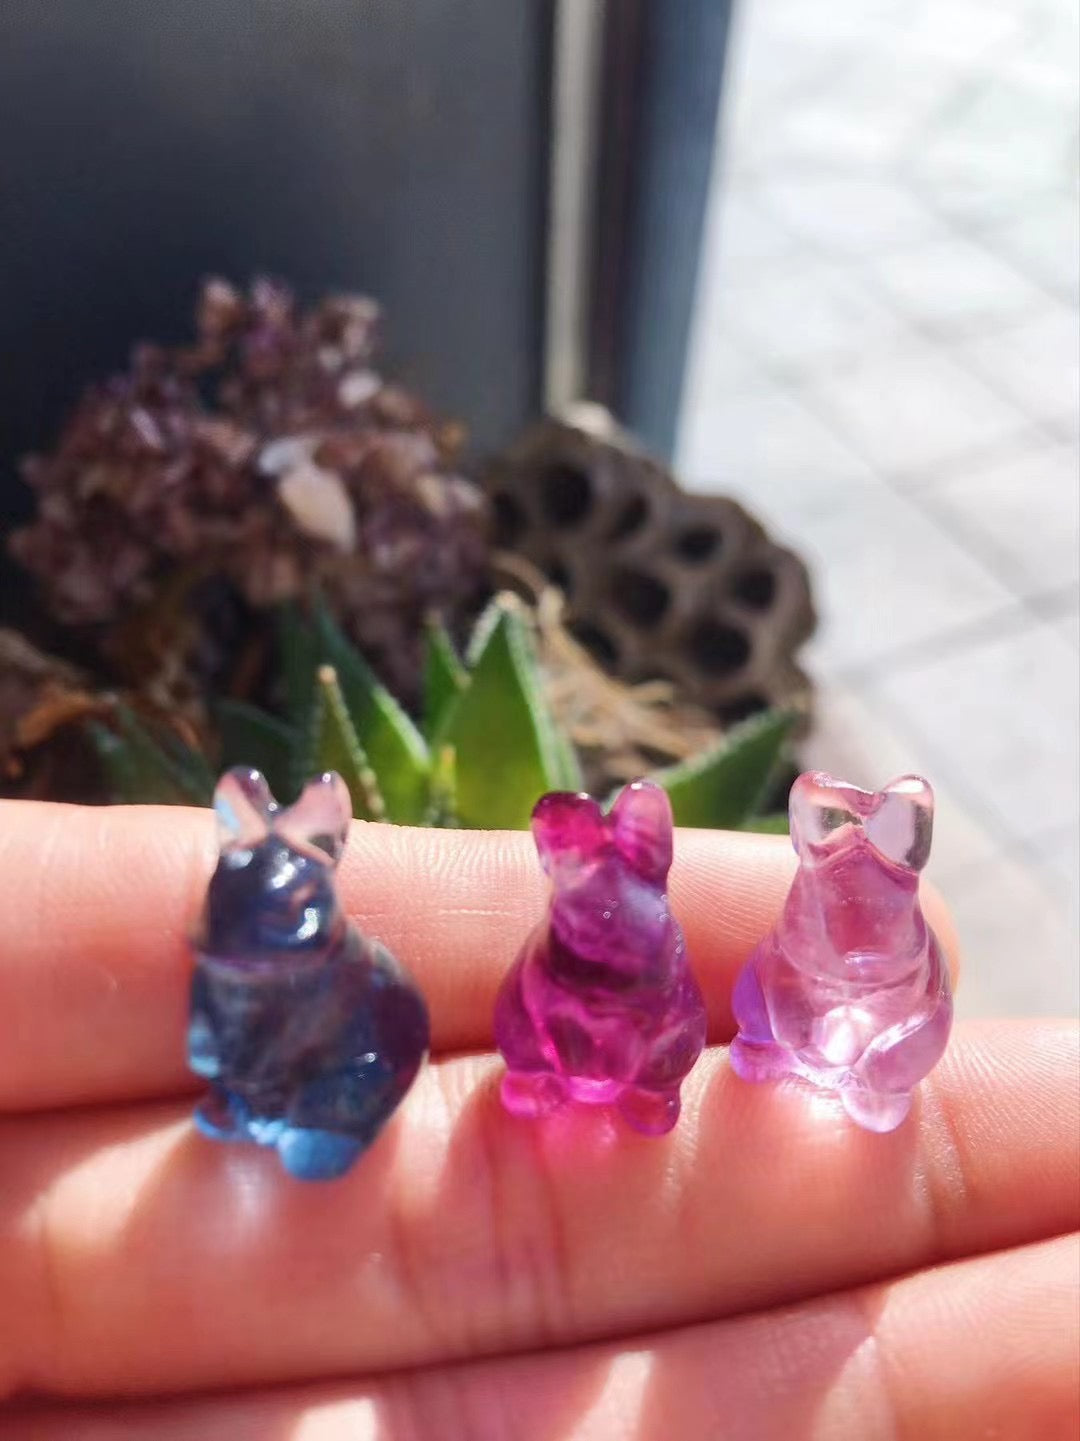 Mini Fluorite Crystal shaped like Buddha, Rabbit, and Hamster0